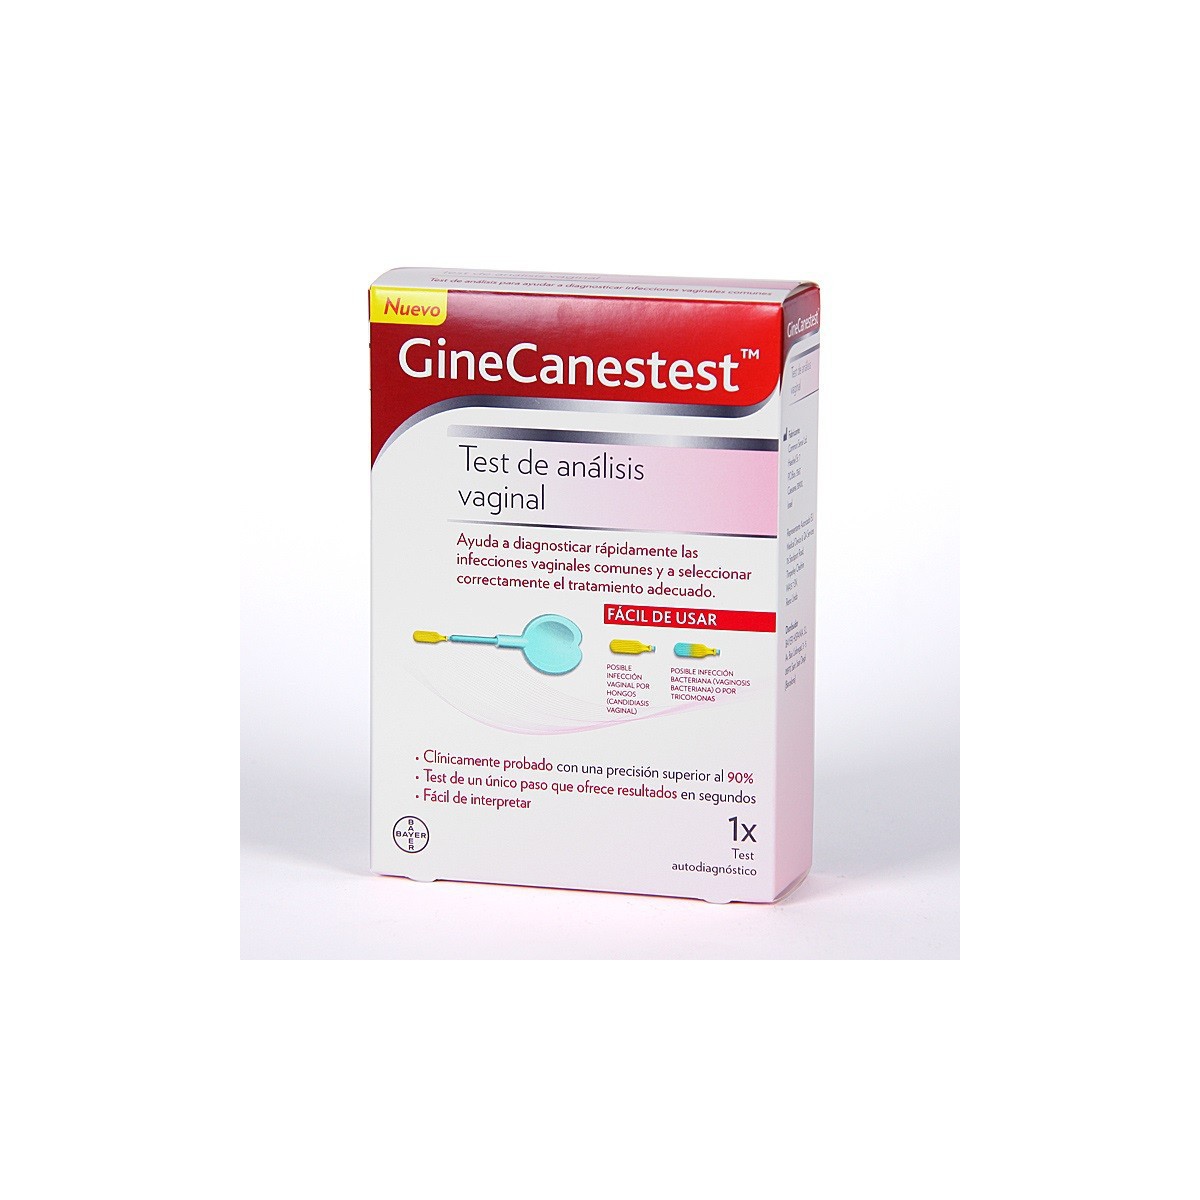 ginecanestest 1 test 